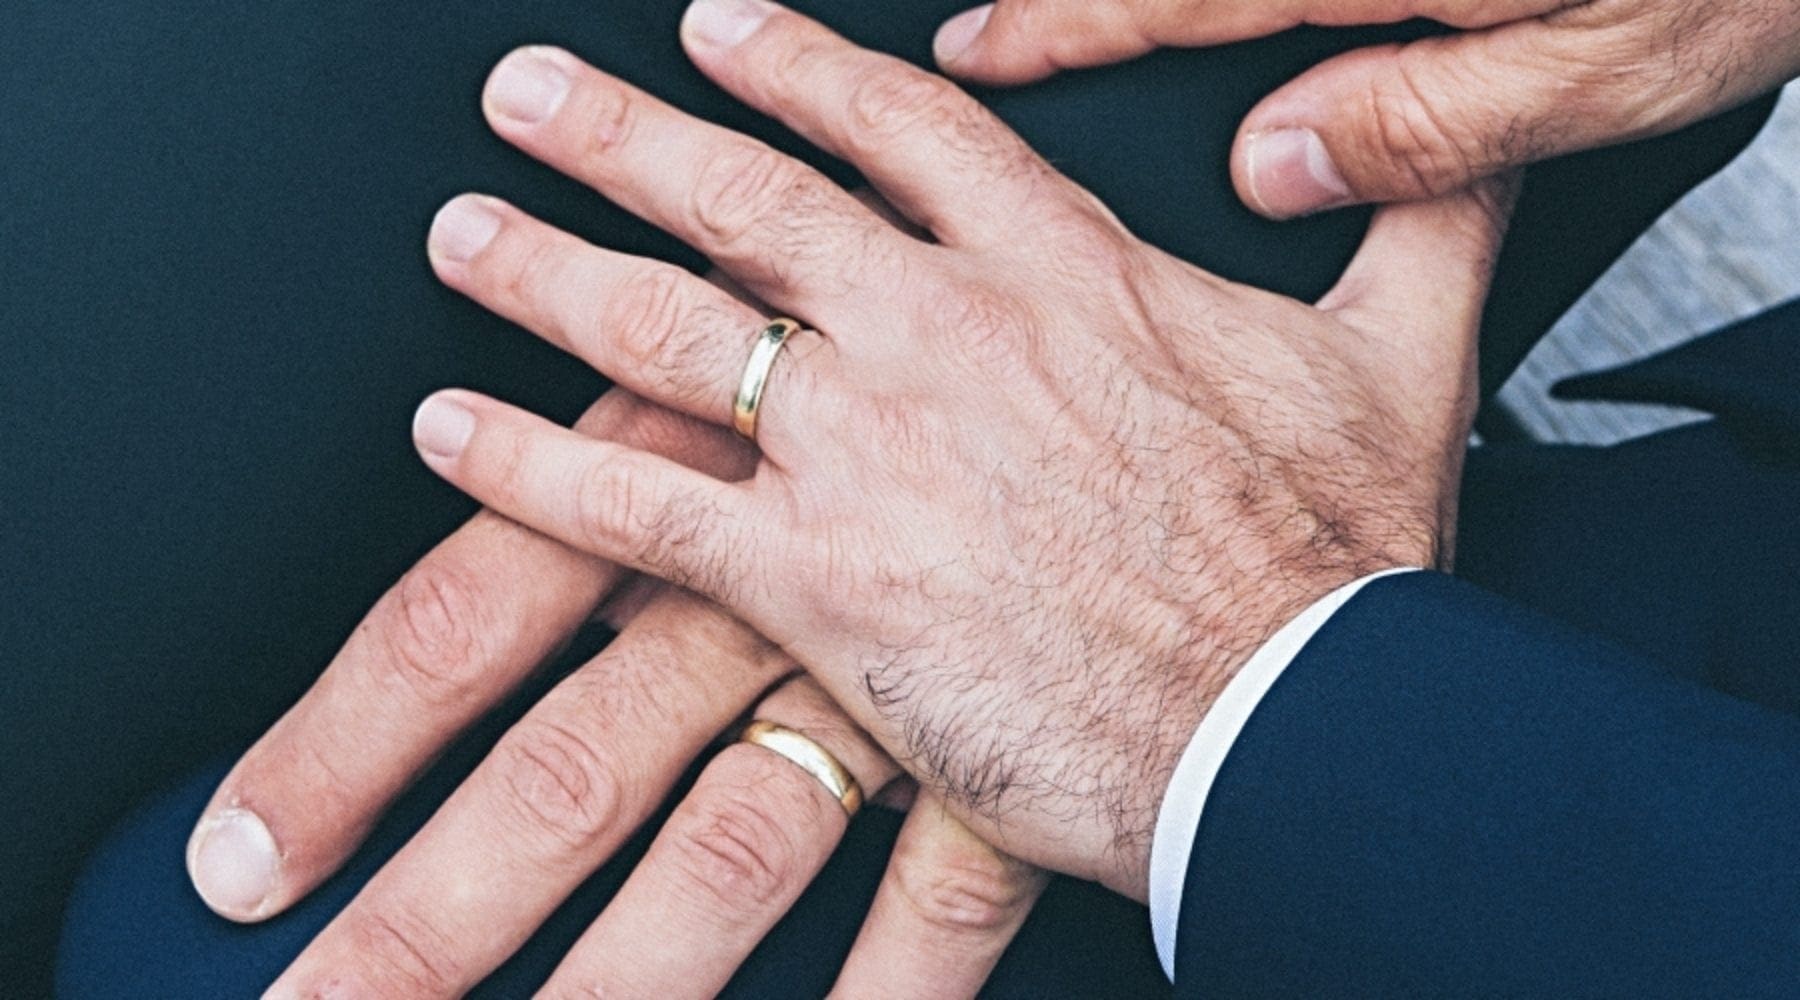 More Mainline Protestant Pastors Affirm Same-Sex Marriage